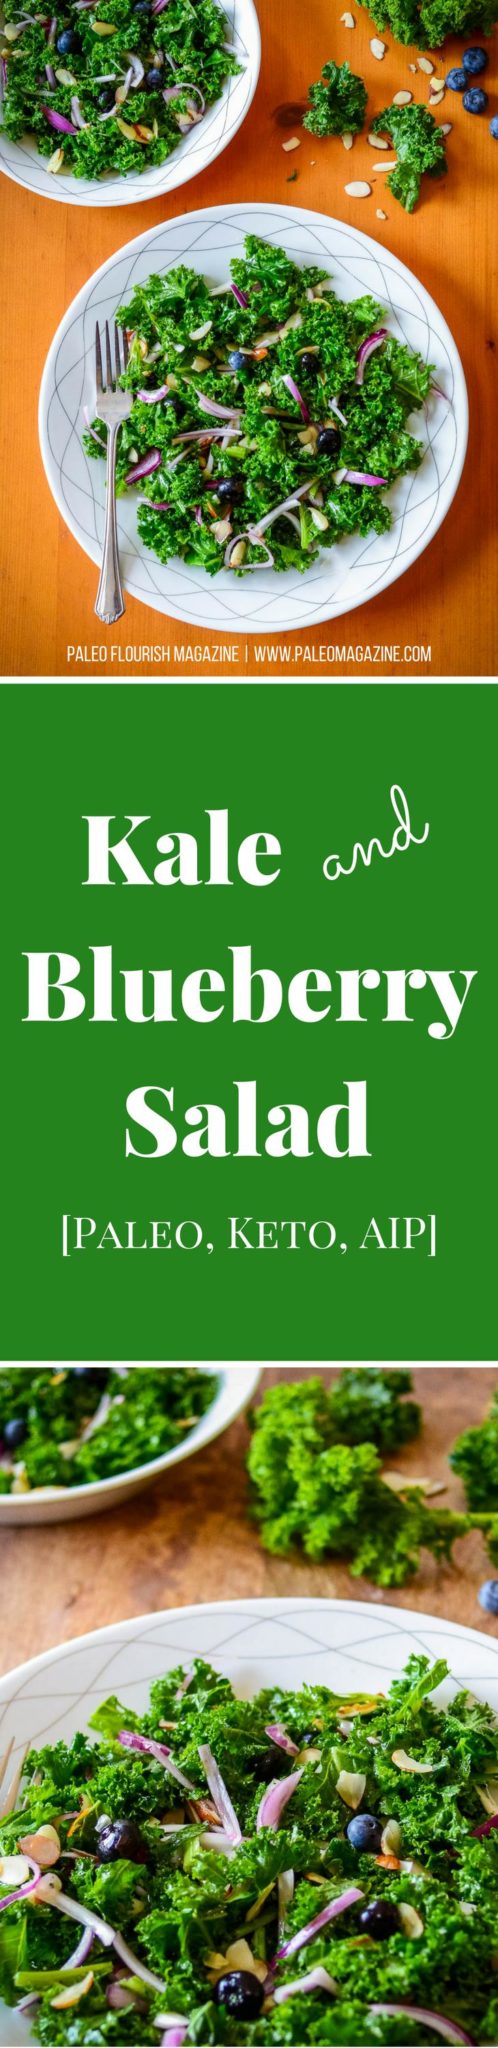 Kale and Blueberry Salad Recipe [Paleo, Keto, AIP] #paleo #keto #aip #recipes - https://ketosummit.com/kale-blueberry-salad-recipe-paleo-keto-aip